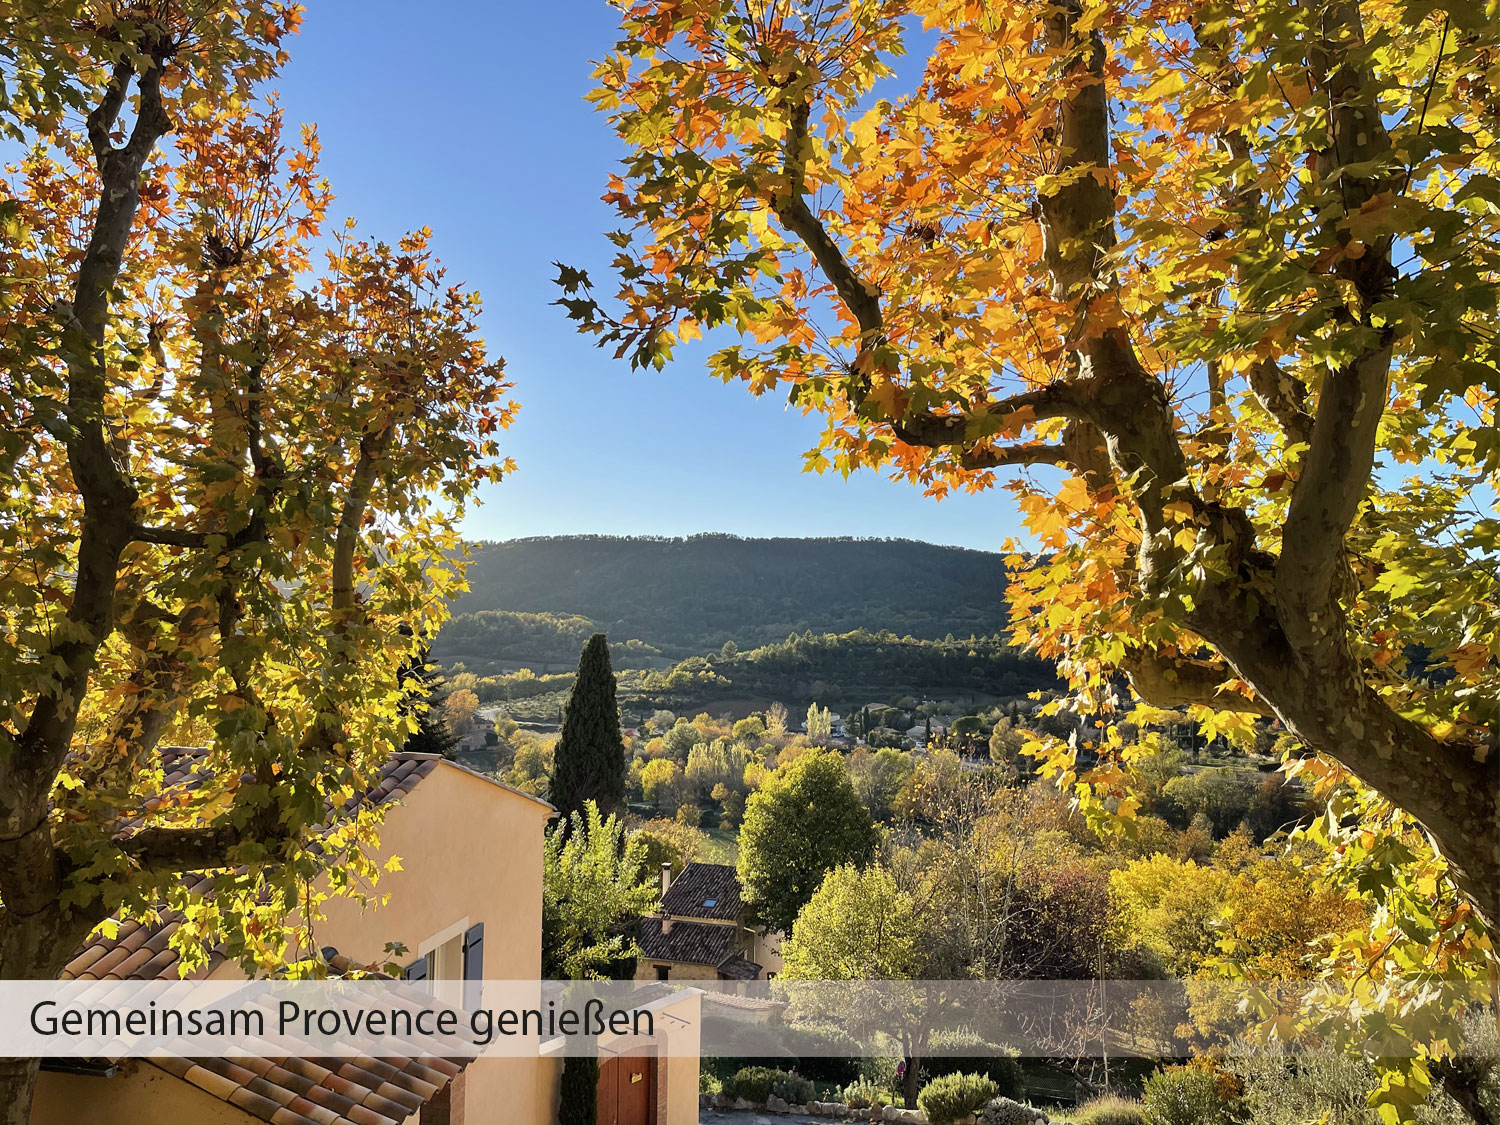 PersonalRevolution_Trainingscamps-Provence_07